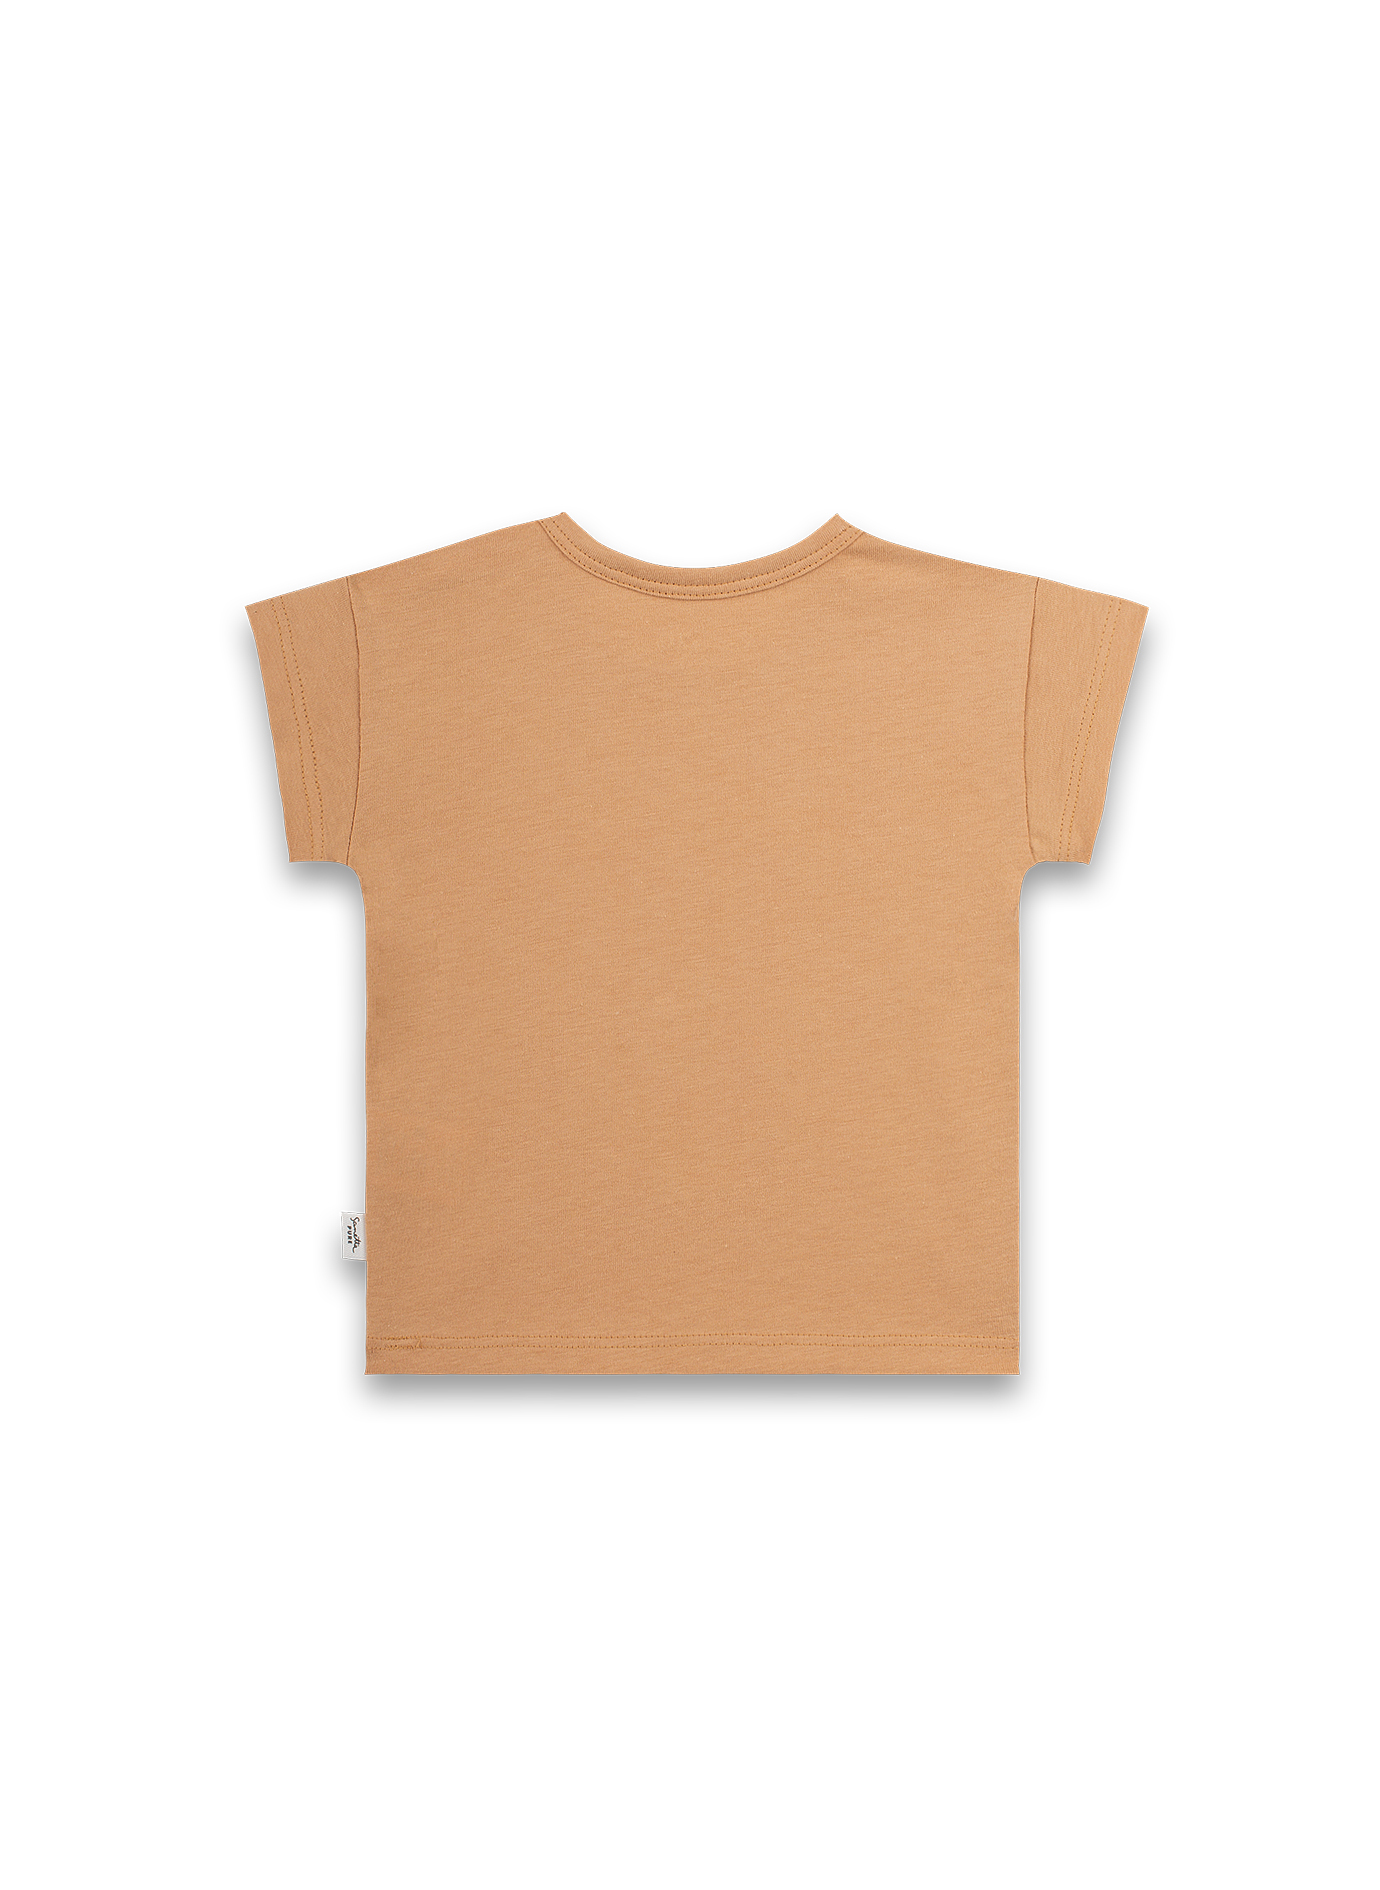 Unisex T-Shirt Braun